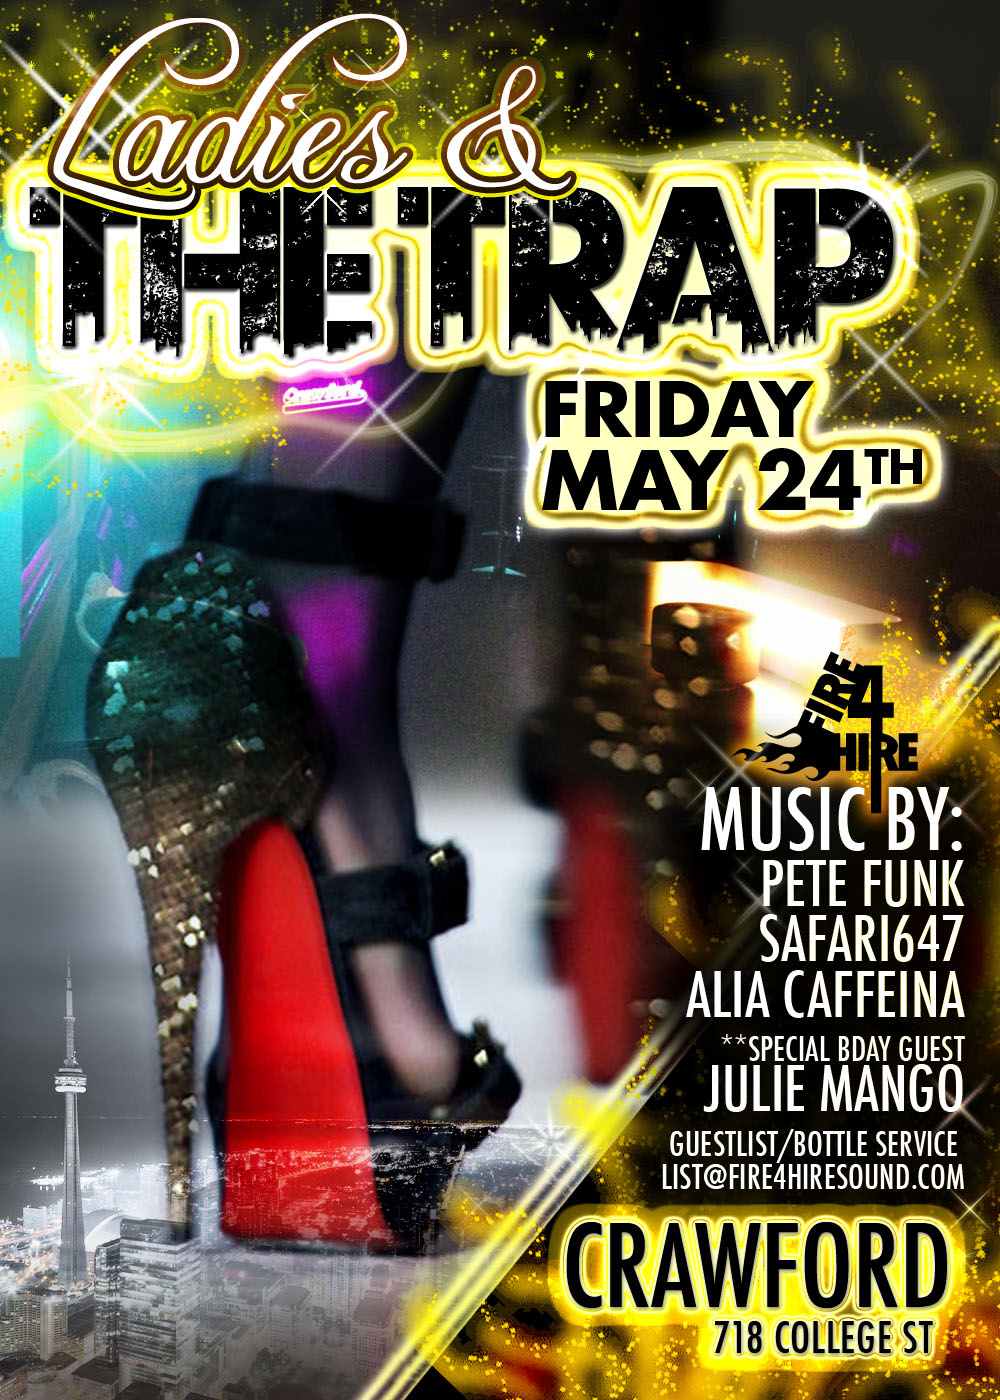 Ladies & The Trap Crawford Toronto Julie Mango ALia Caffeina Safari647 Pete Funk College Street Toronto